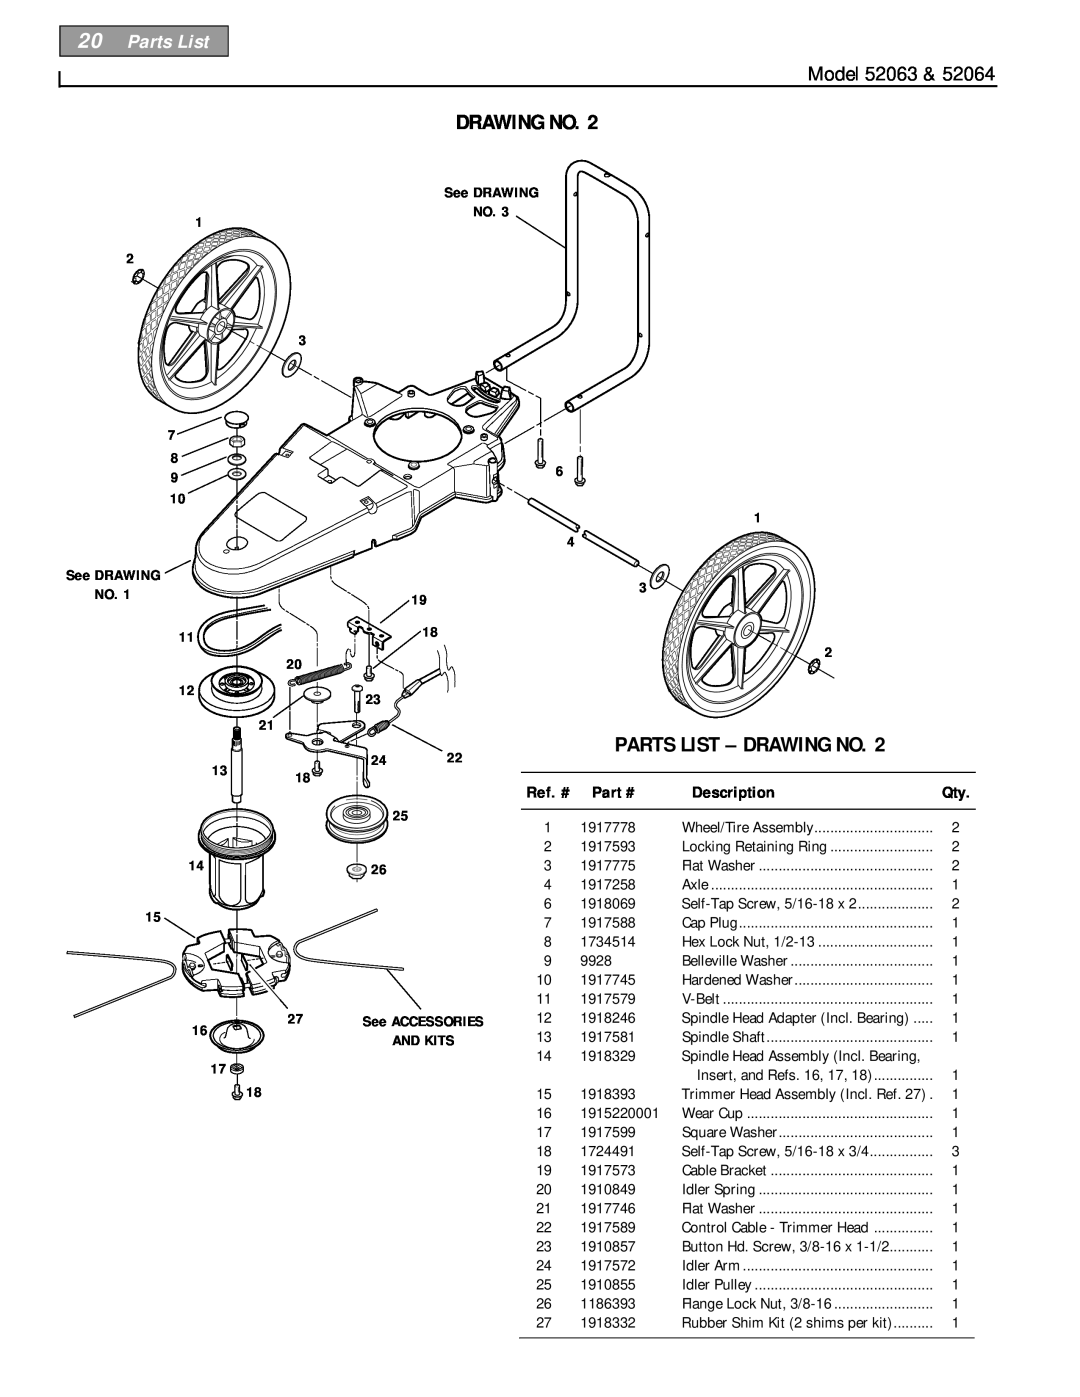 Troy-Bilt 52063, 52064 owner manual Parts List - Drawing No, Model, Ref. #, Description, See DRAWING 